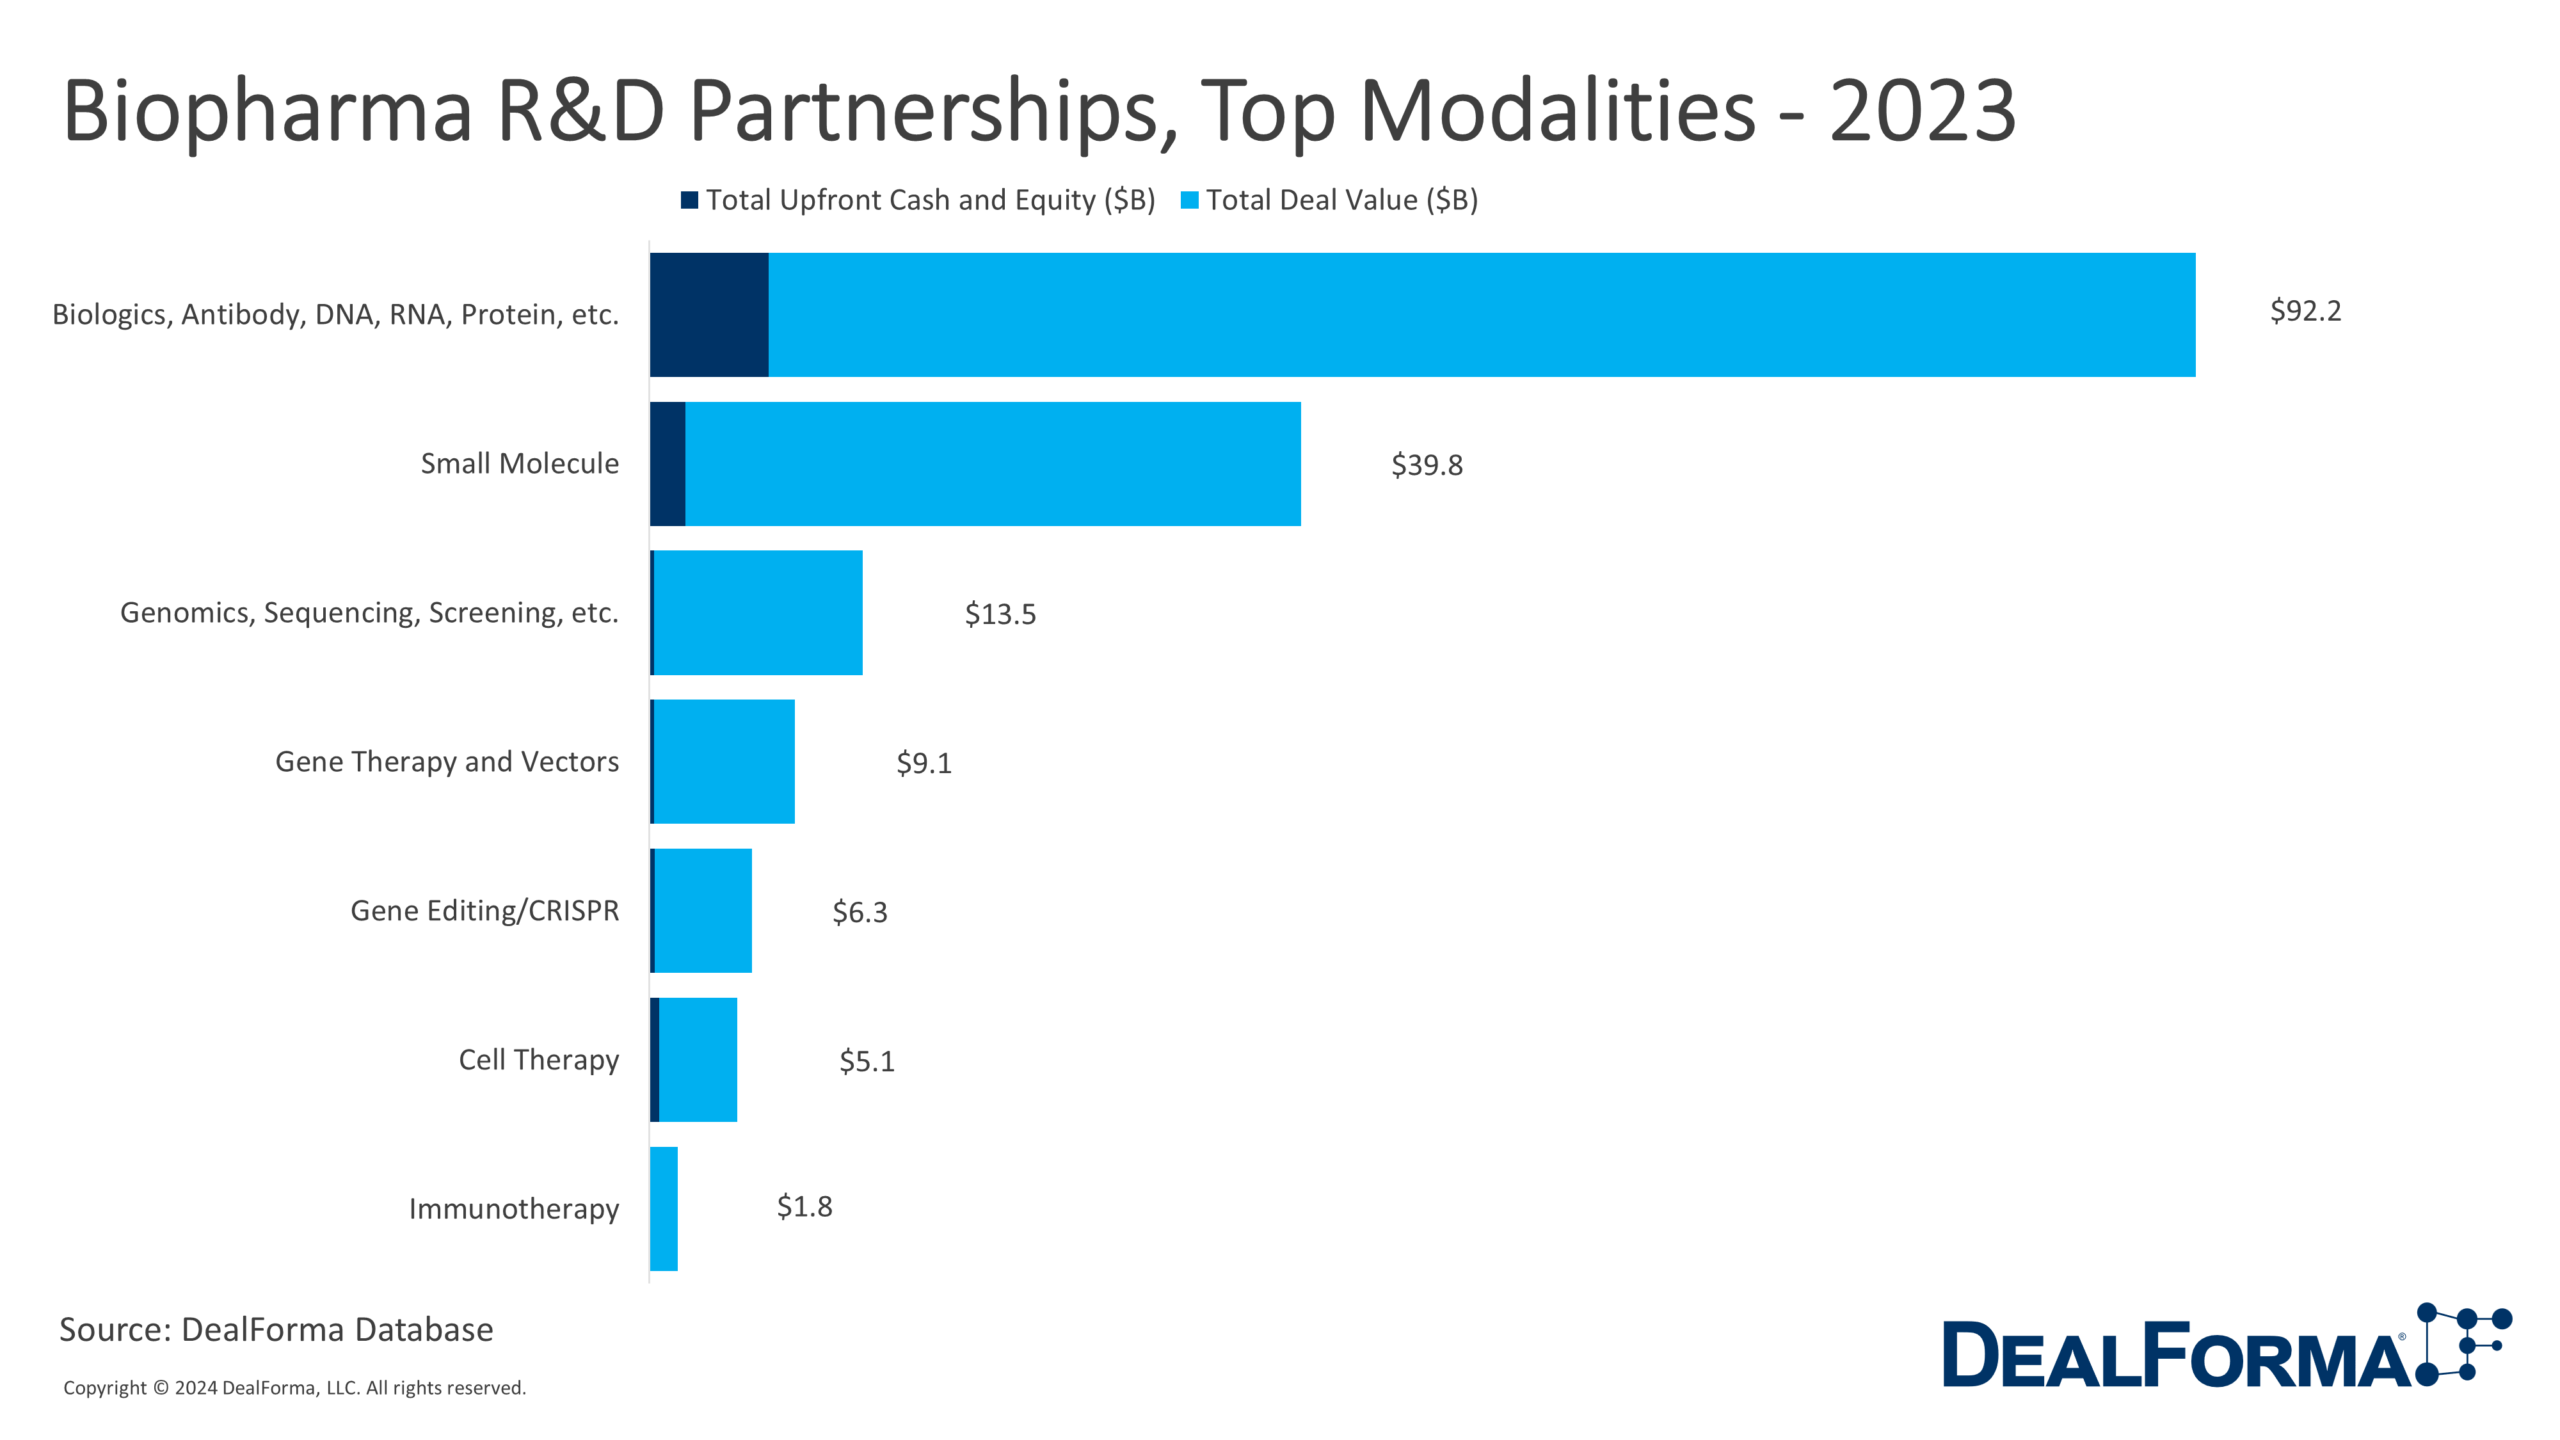 Biopharma R&D Partnerships, Top Modalities - 2023